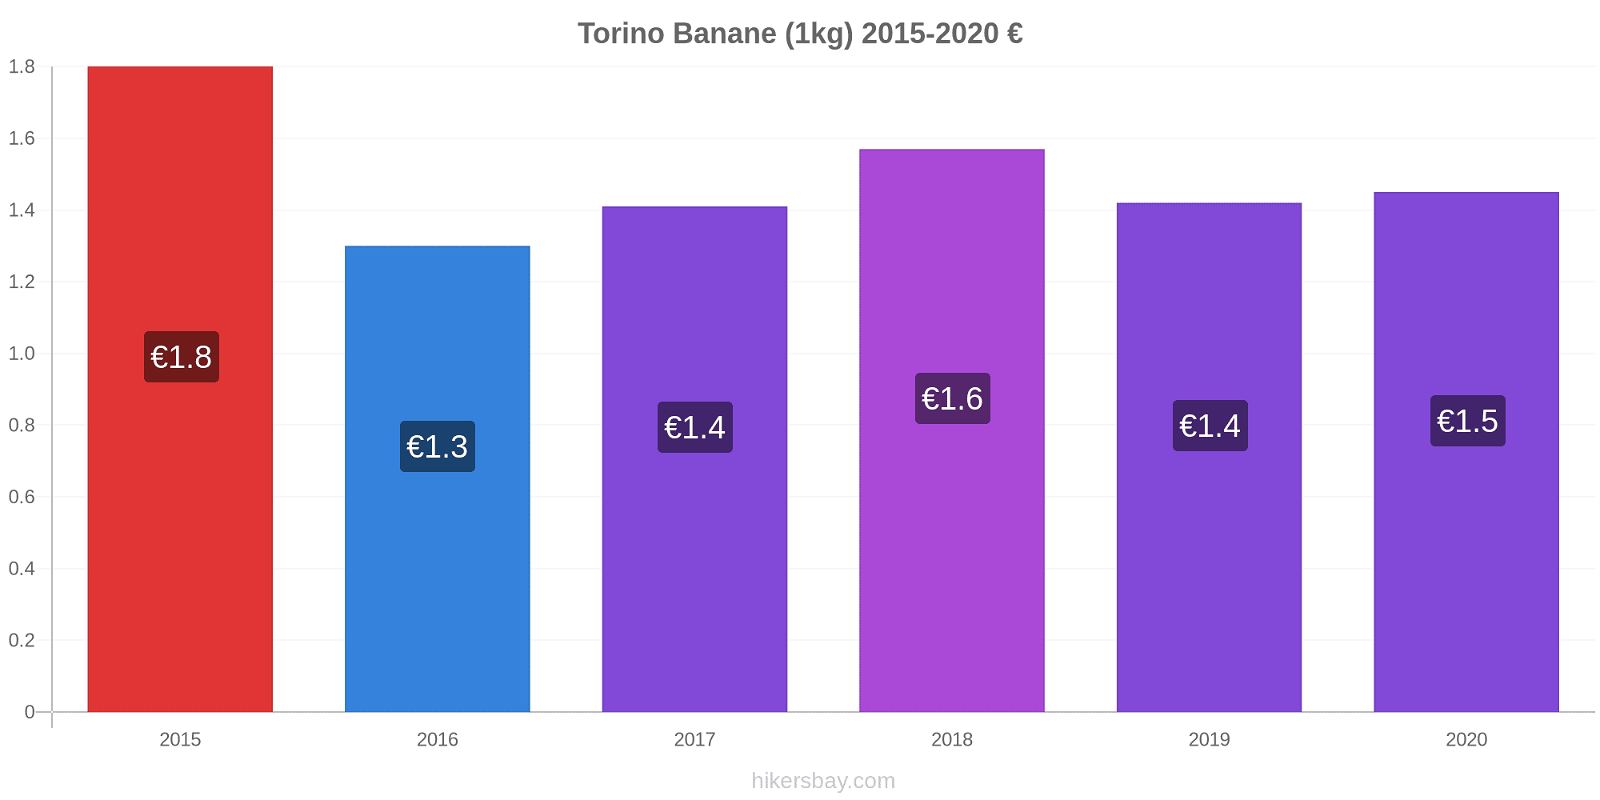 Torino variazioni di prezzo Banana (1kg) hikersbay.com